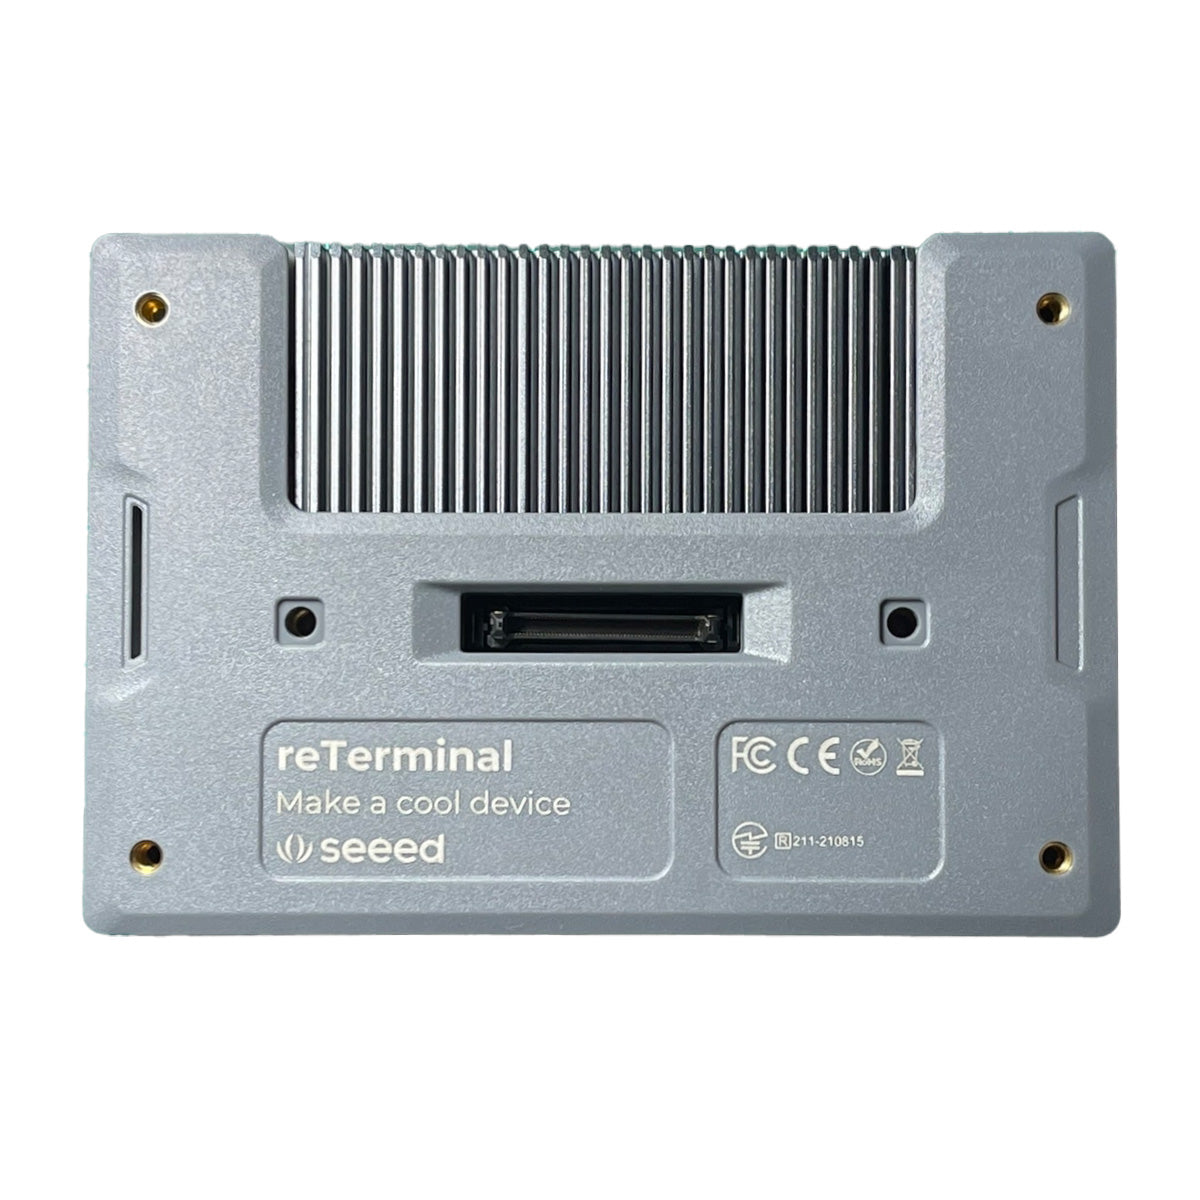 Raspberry Pi 4 4GB reTerminal CM4 32GB eMMC Kit